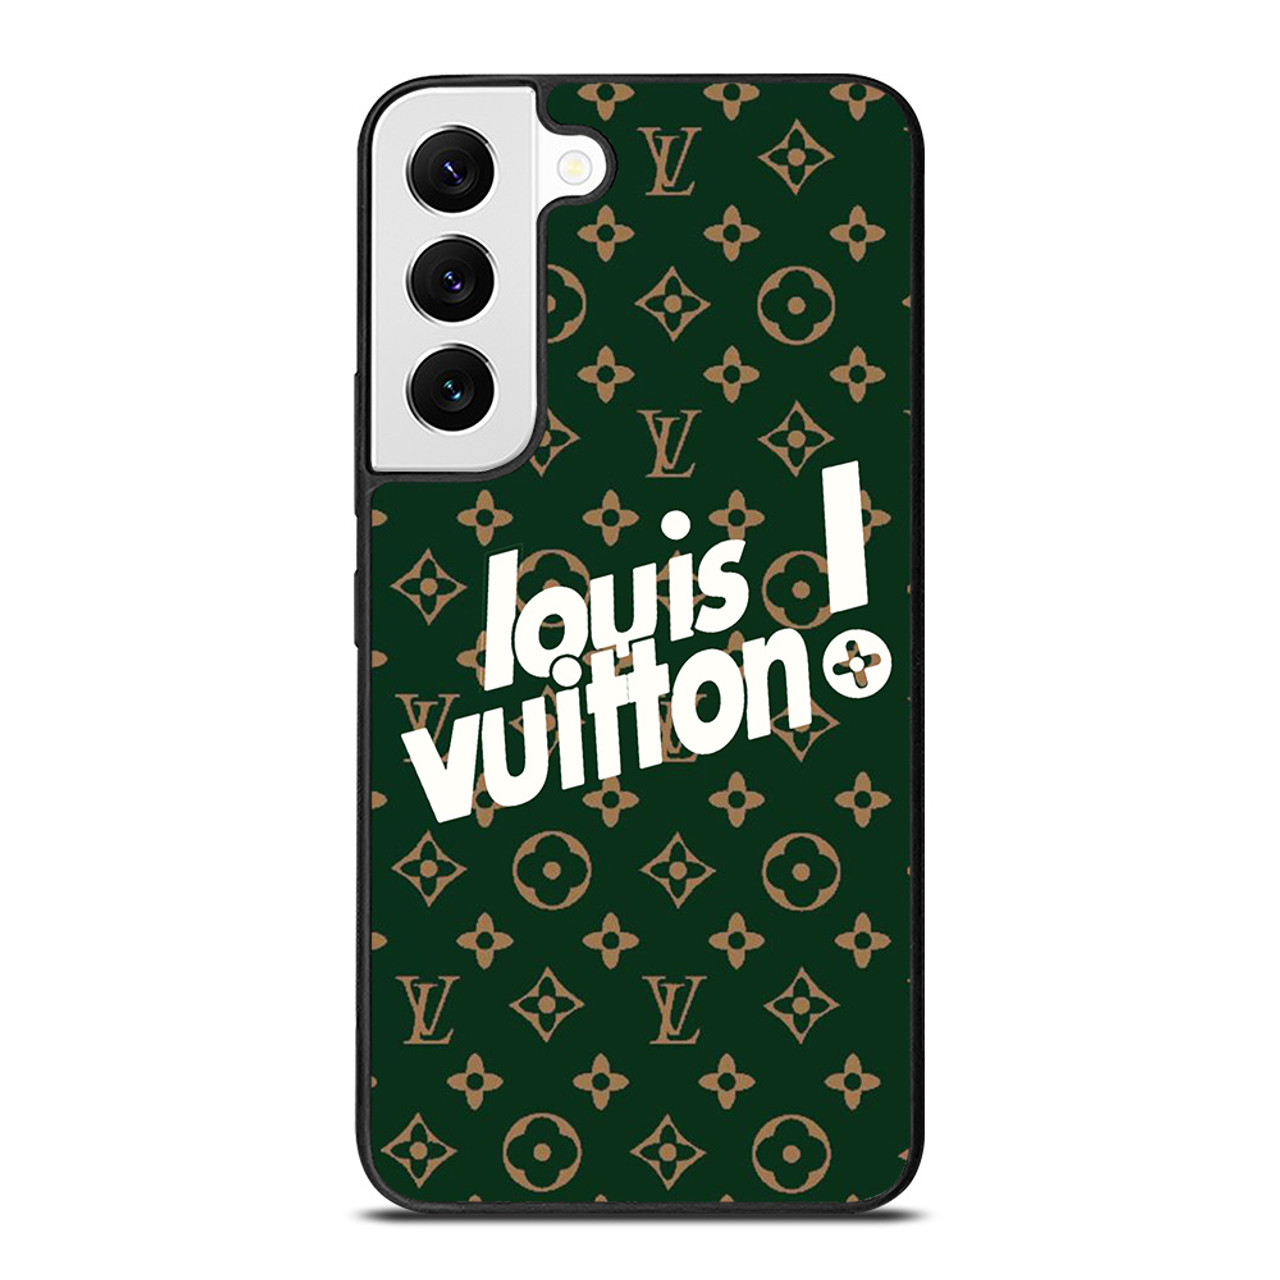 LOUIS VUITTON ROUND PATTERN Samsung Galaxy S20 Case Cover